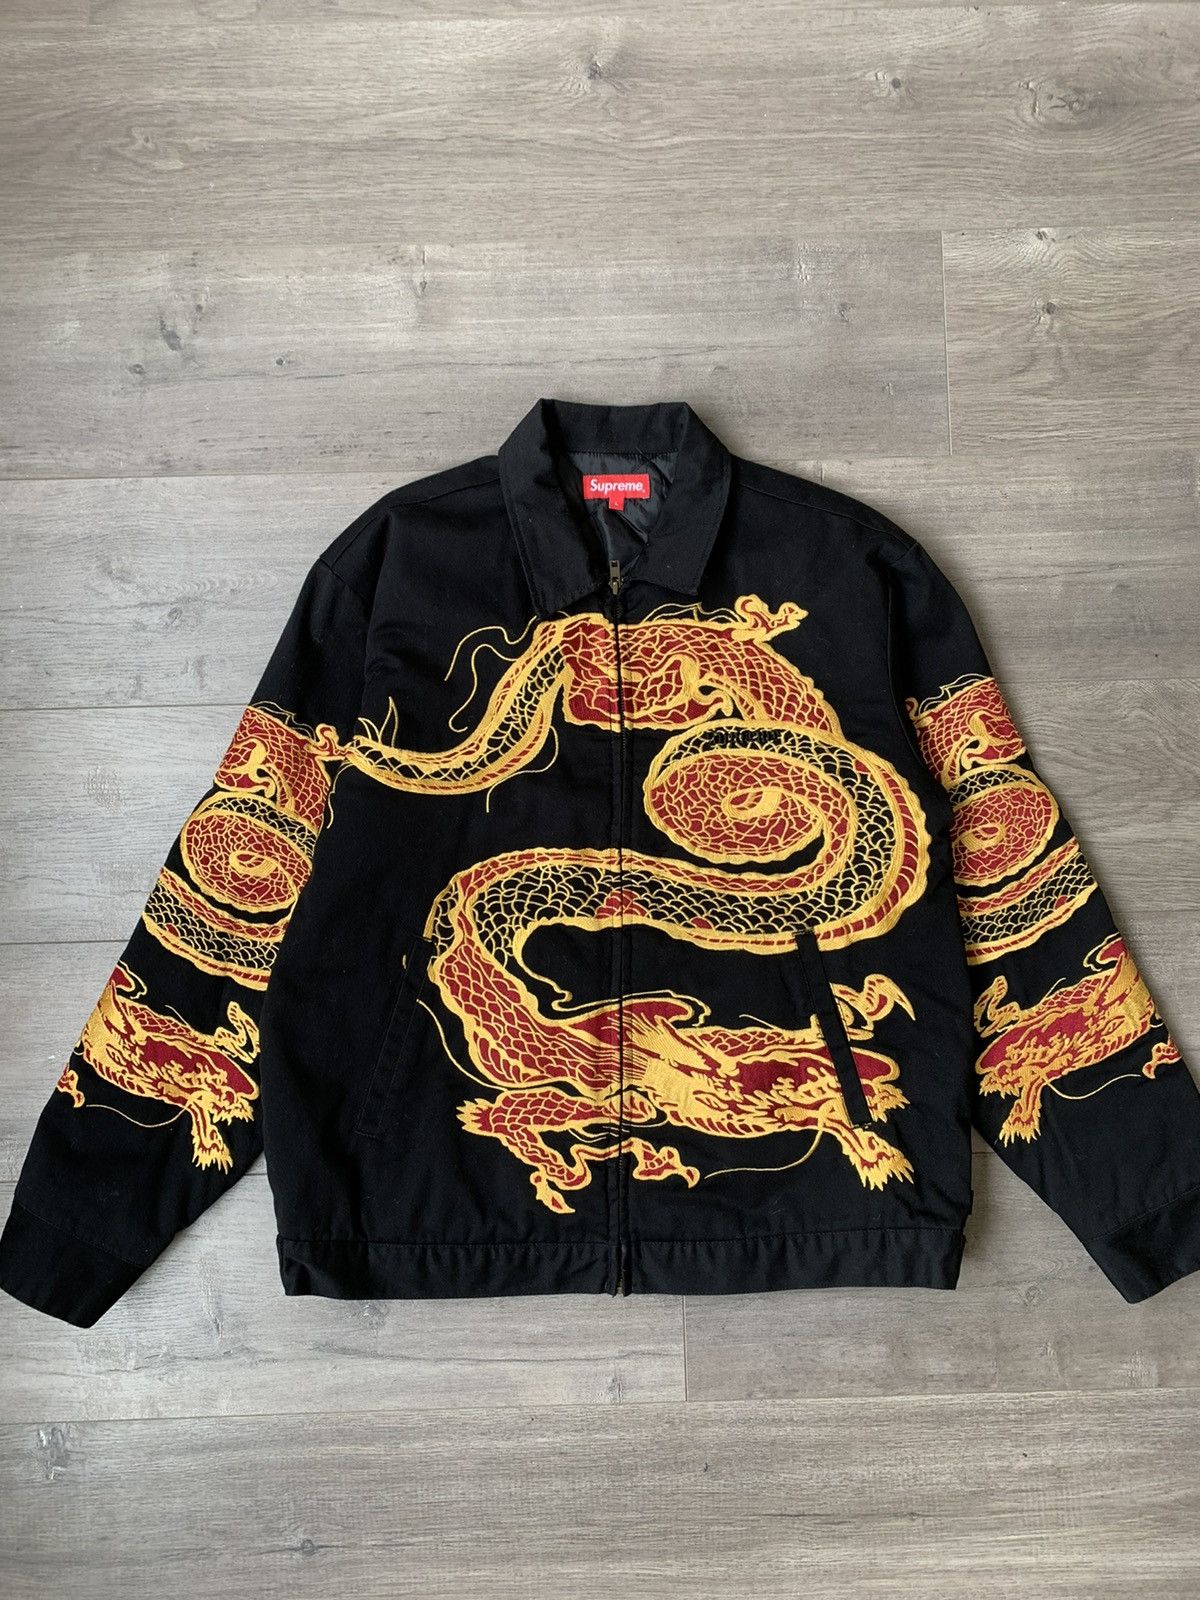 Supreme Supreme Work Dragon Jacket | Grailed